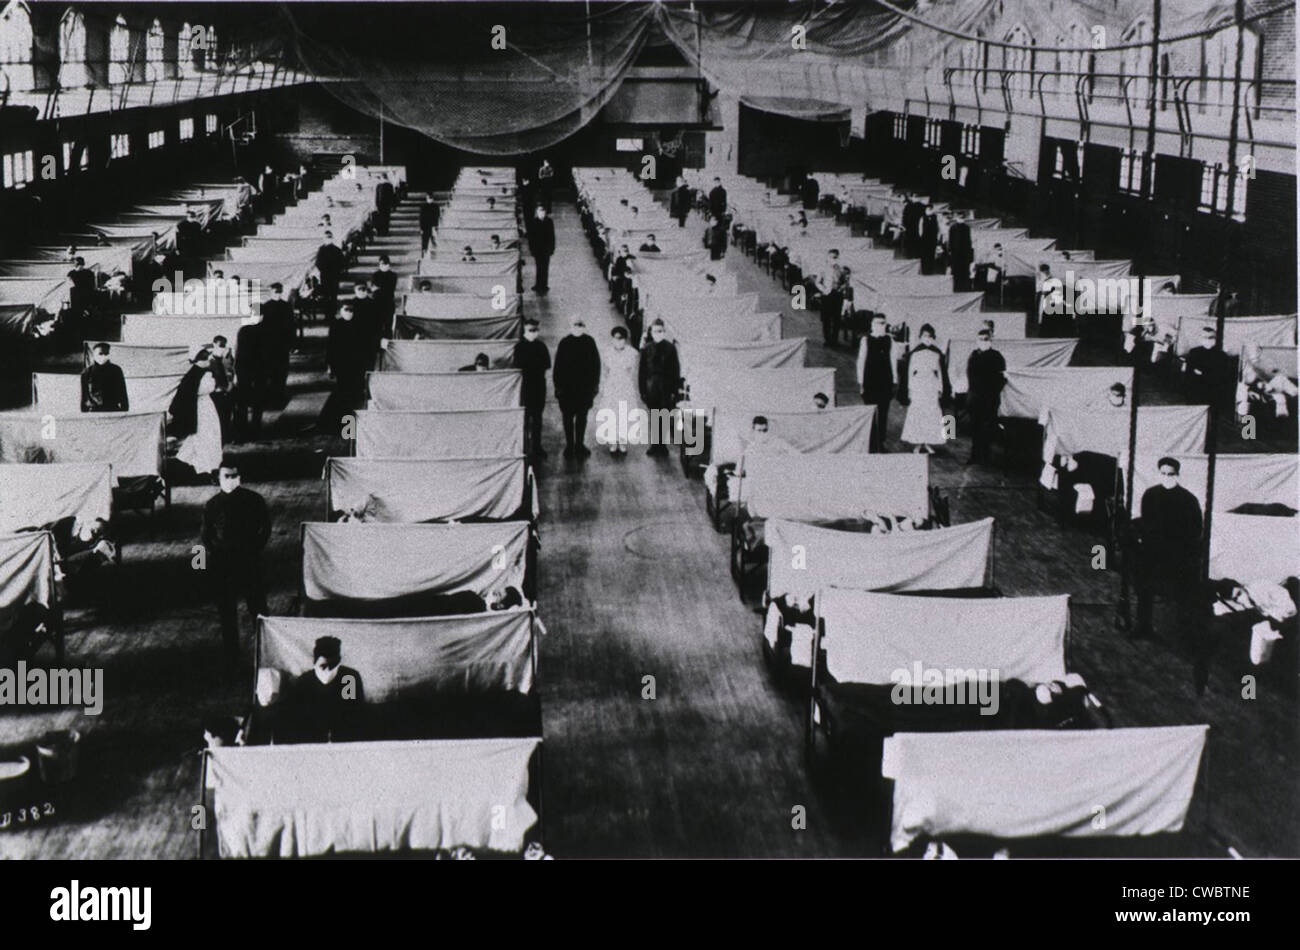 Spanish_Flu_Epidemic_1918-19_US_school_g